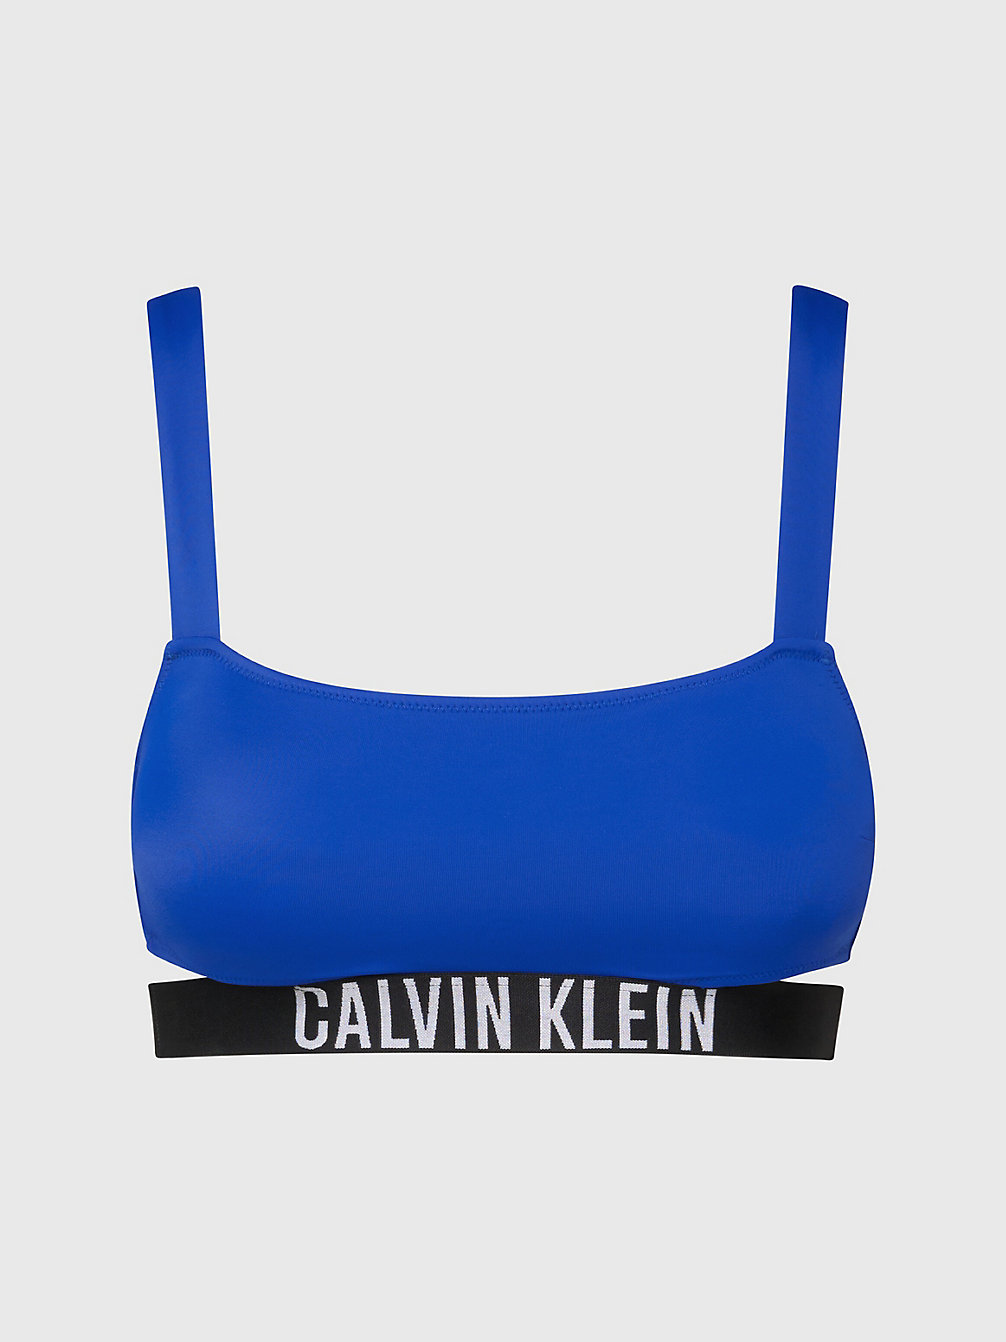 BISTRO BLUE > Góra Od Bikini Typu Bralette - Intense Power > undefined Kobiety - Calvin Klein